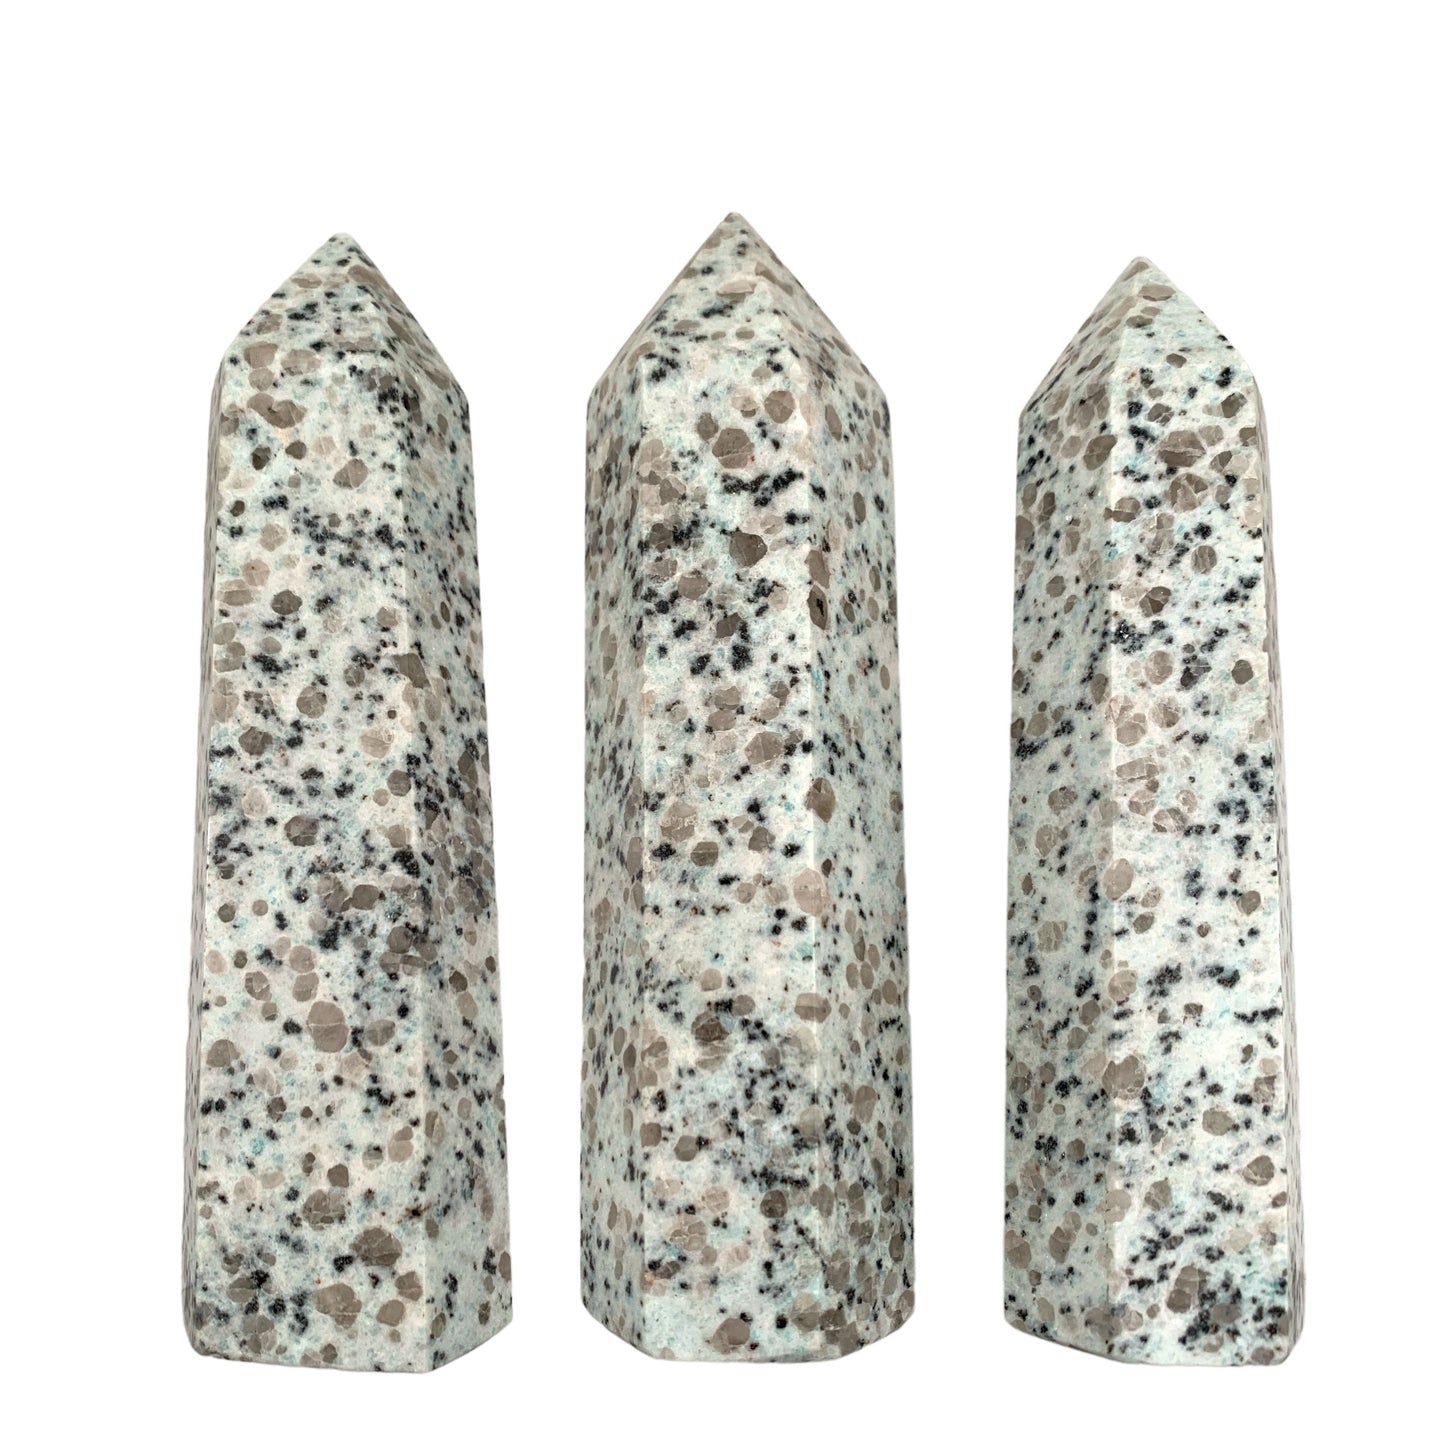 Kiwi Jasper - Point Stone inch - Price per gram per piece - China - NEW622